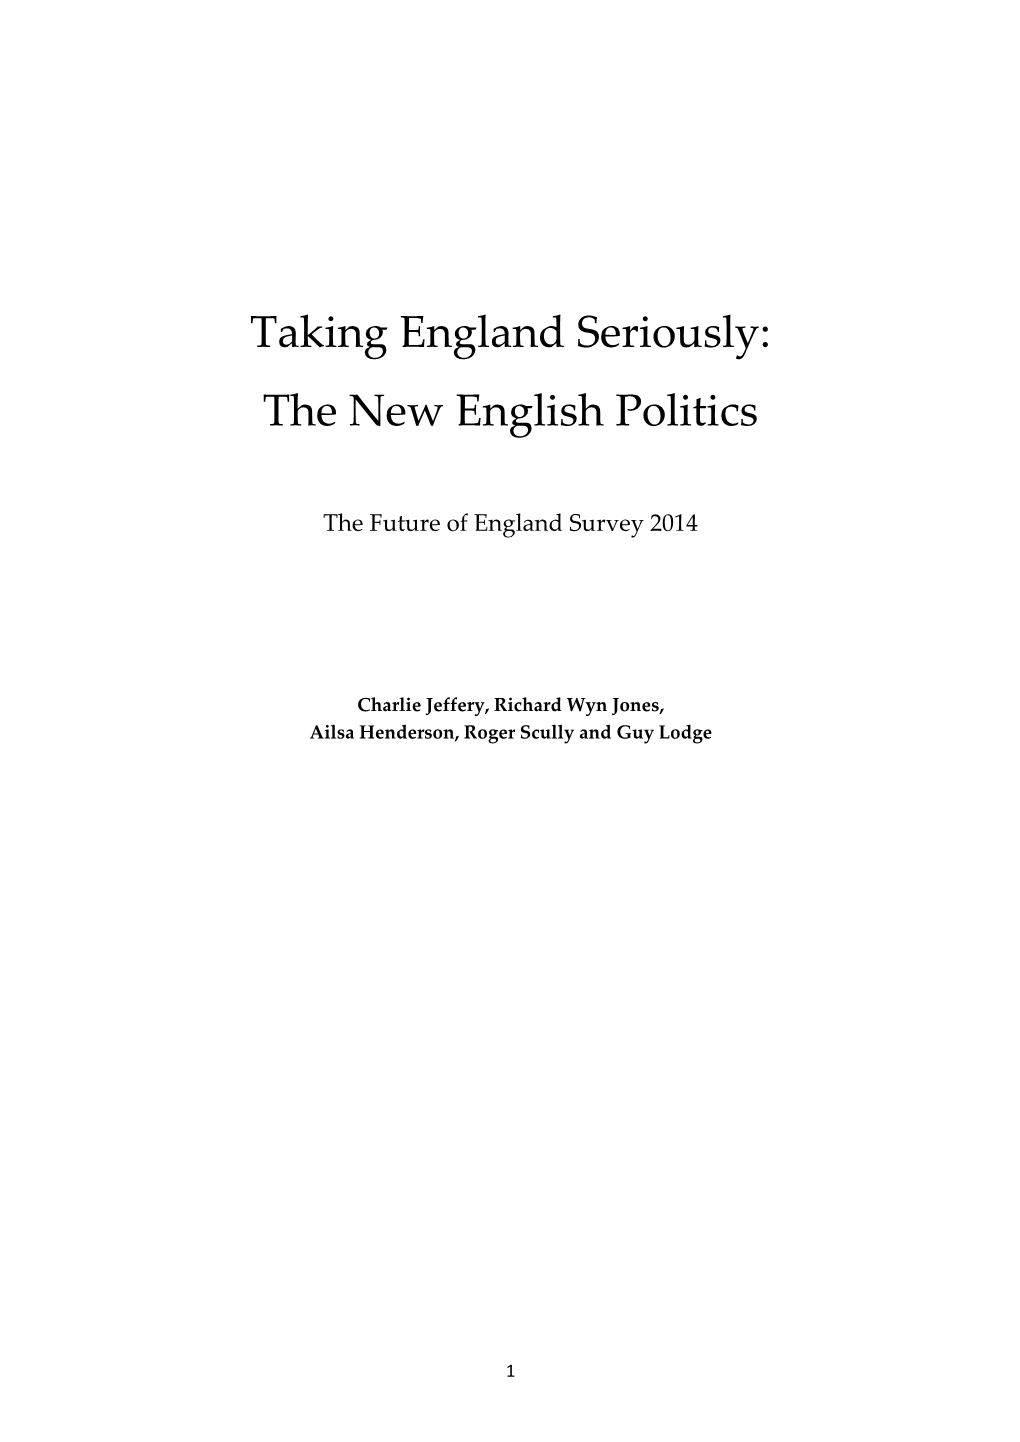 Taking England Seriously: the New English Politics